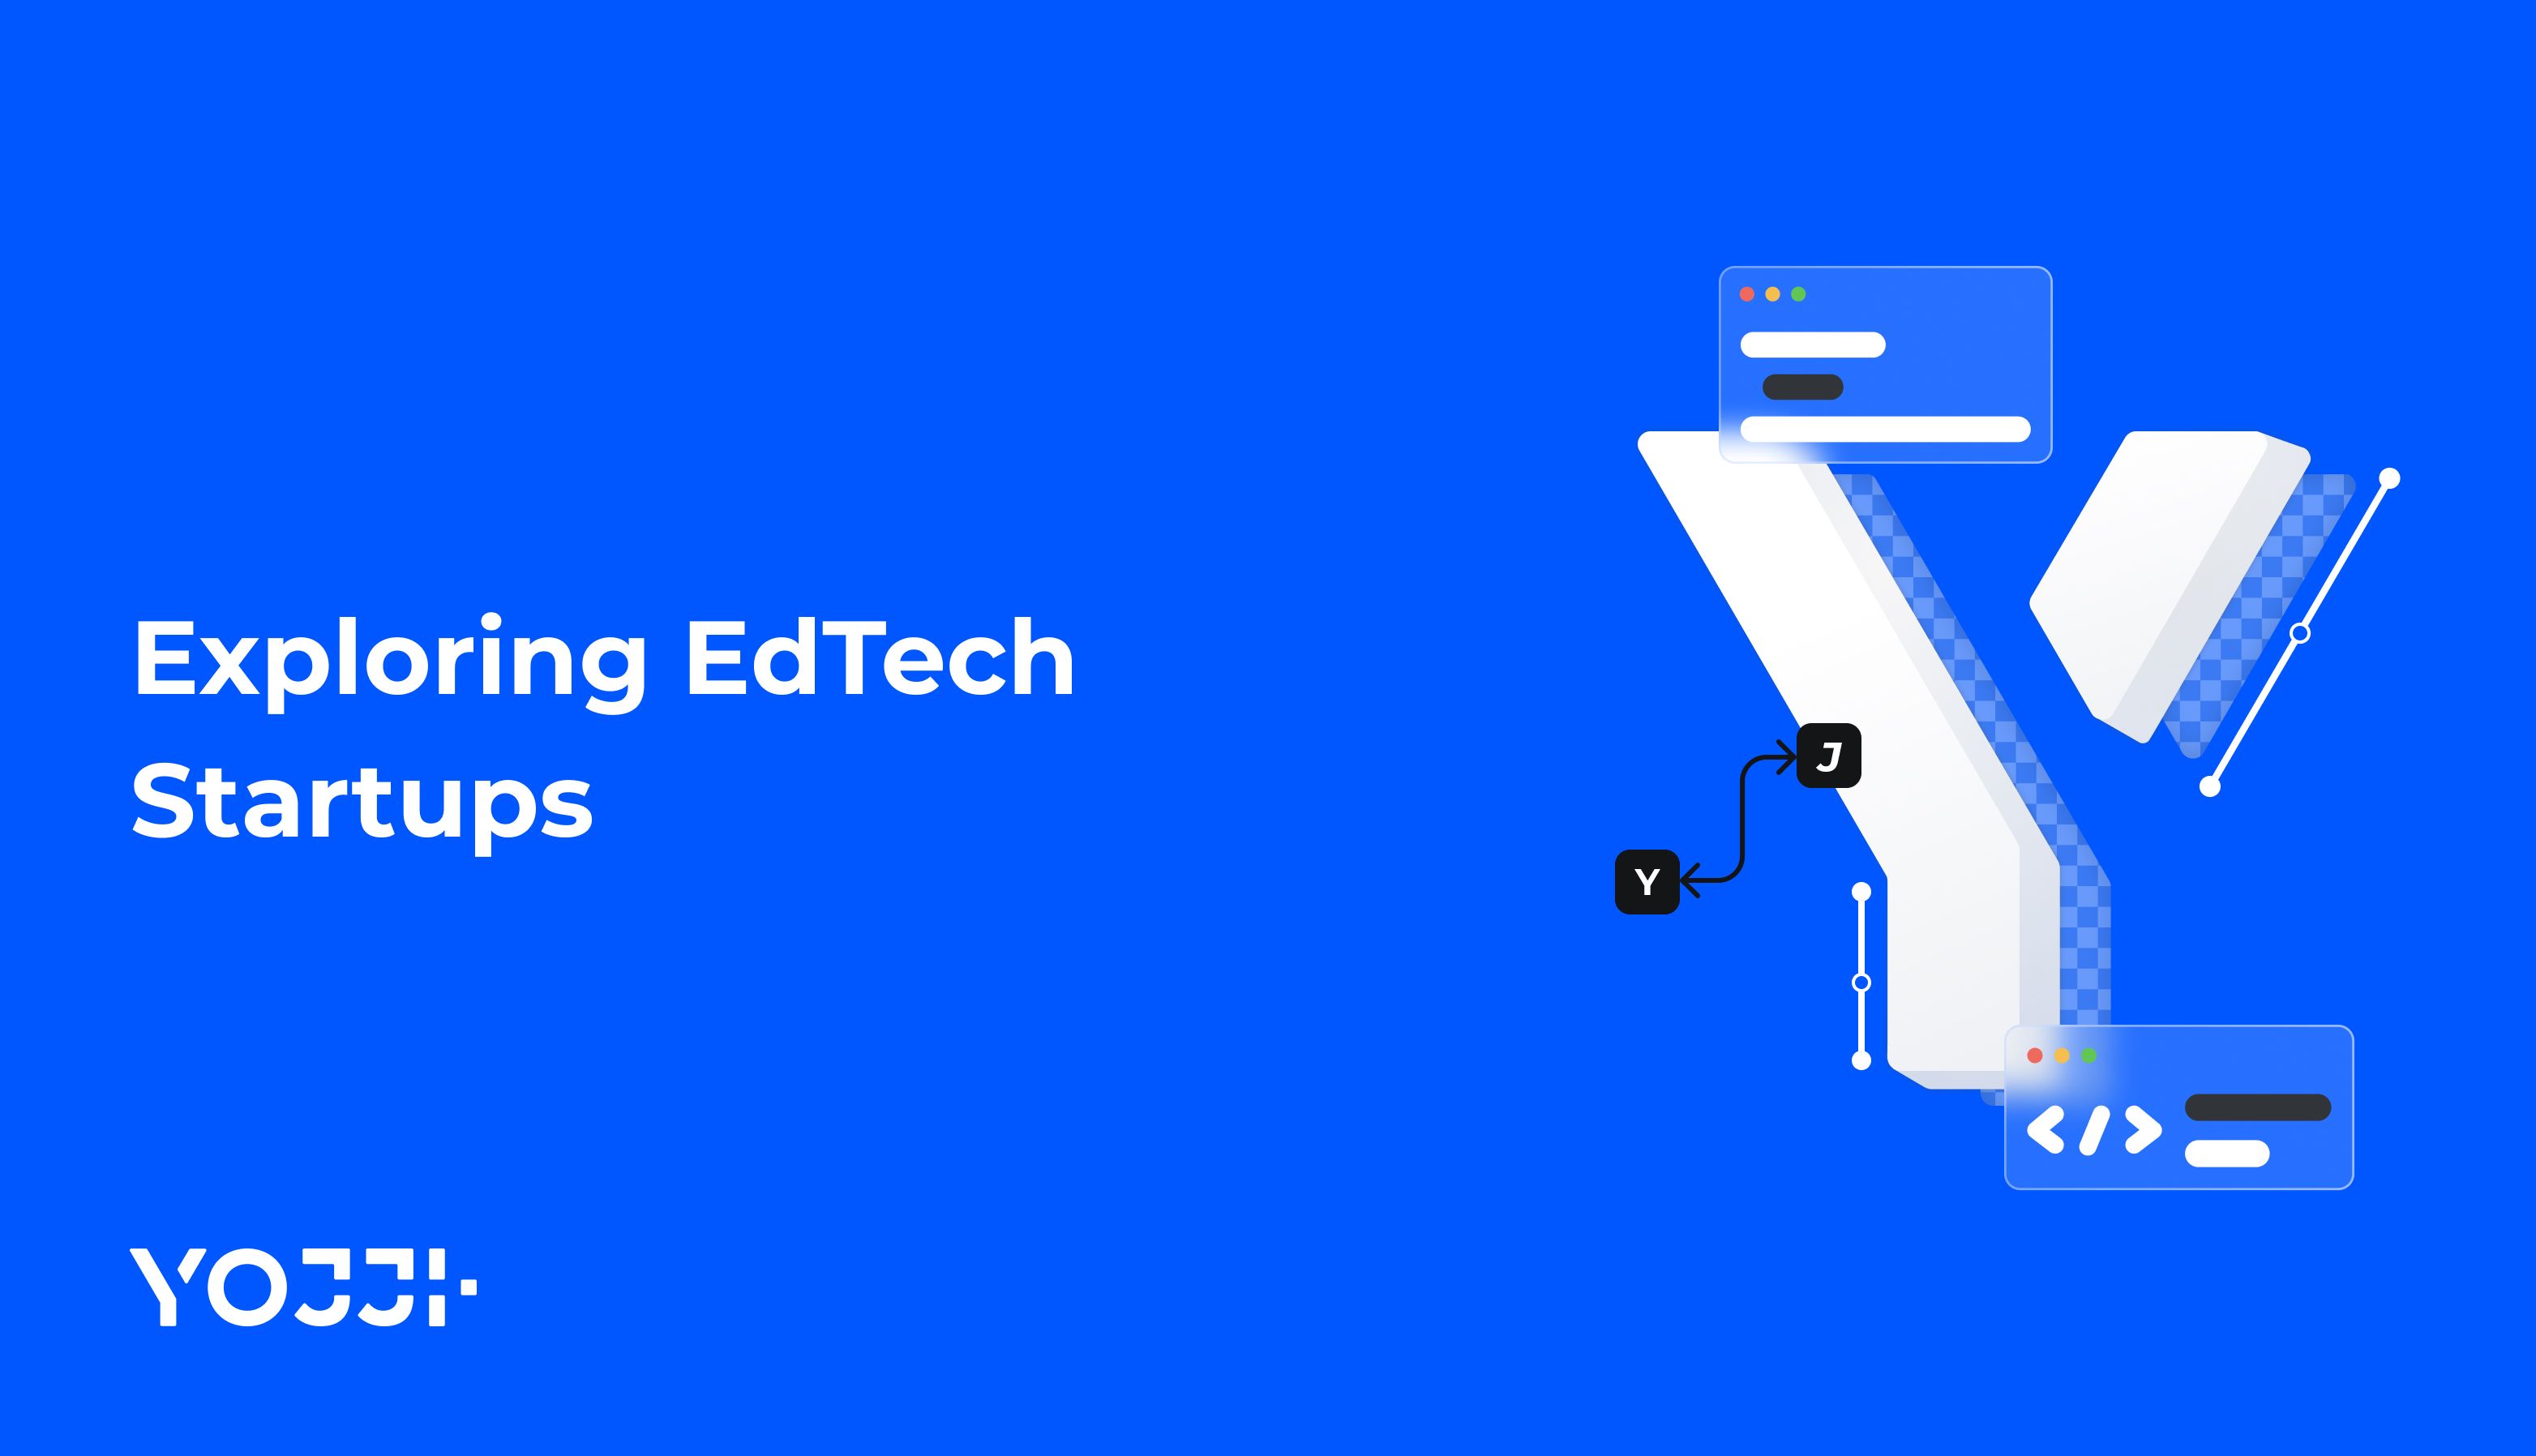 Expoloring edtech startups